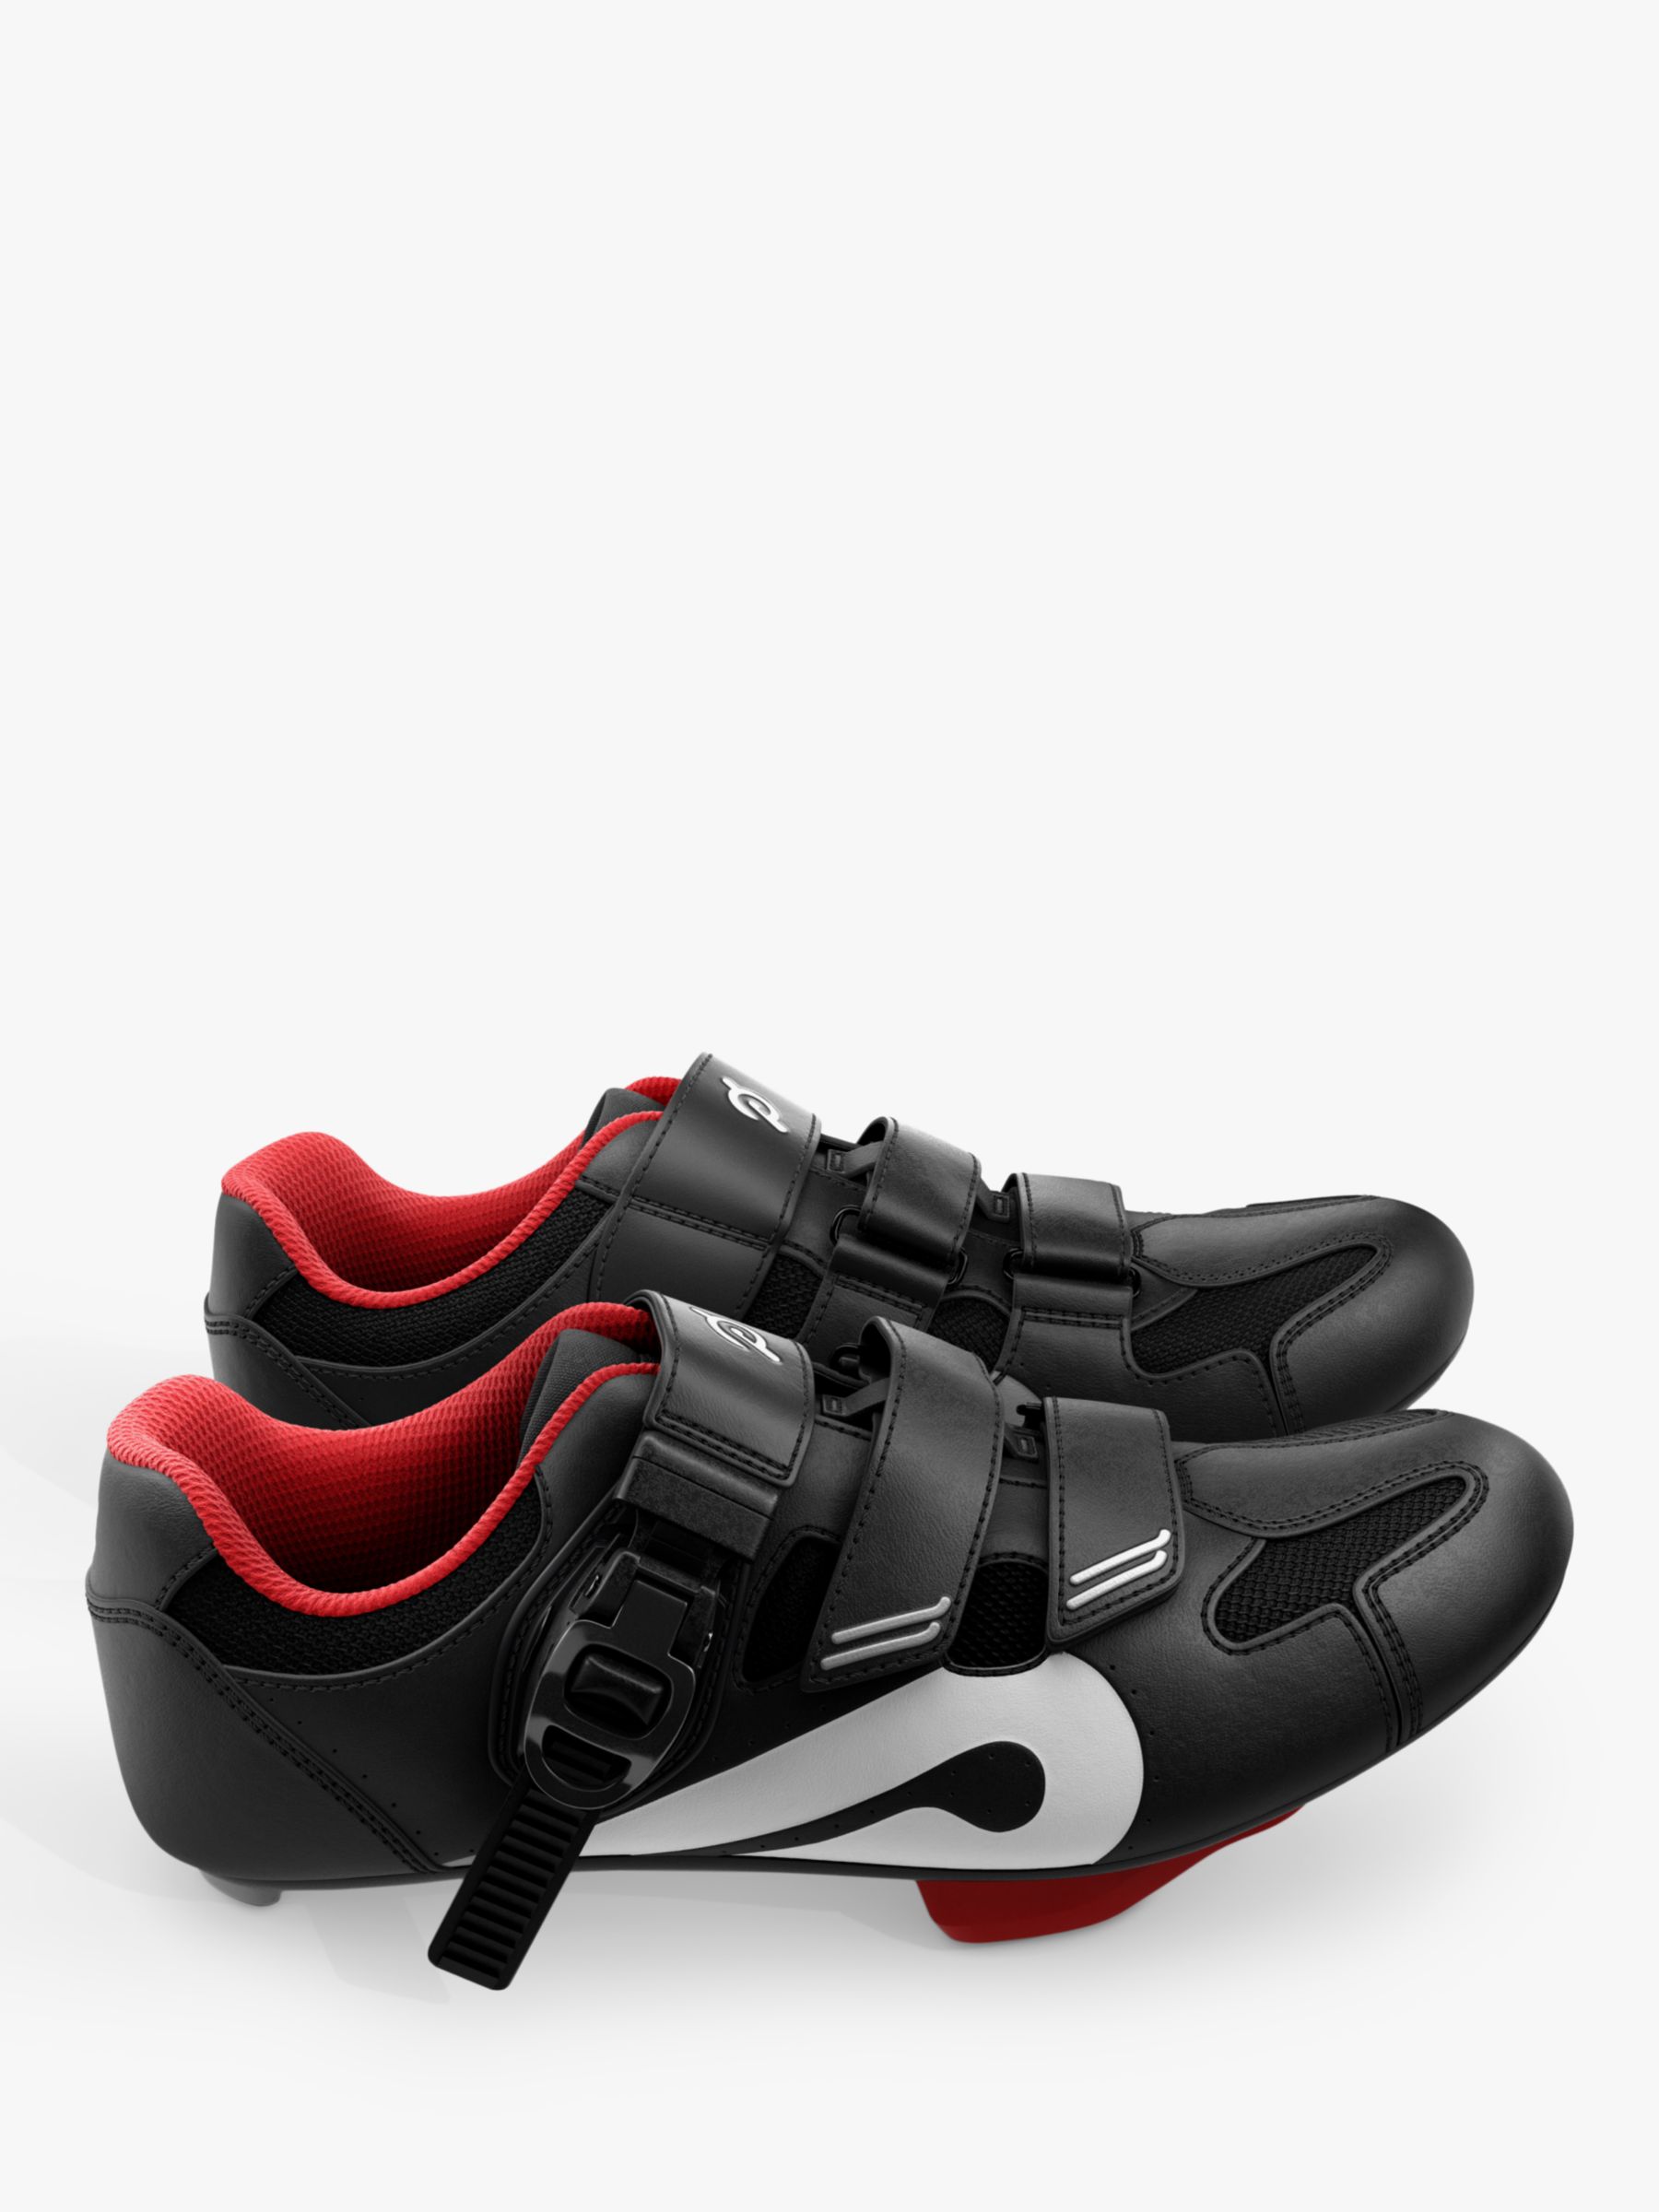 Peloton Cycling Shoes, Black/Red, 10